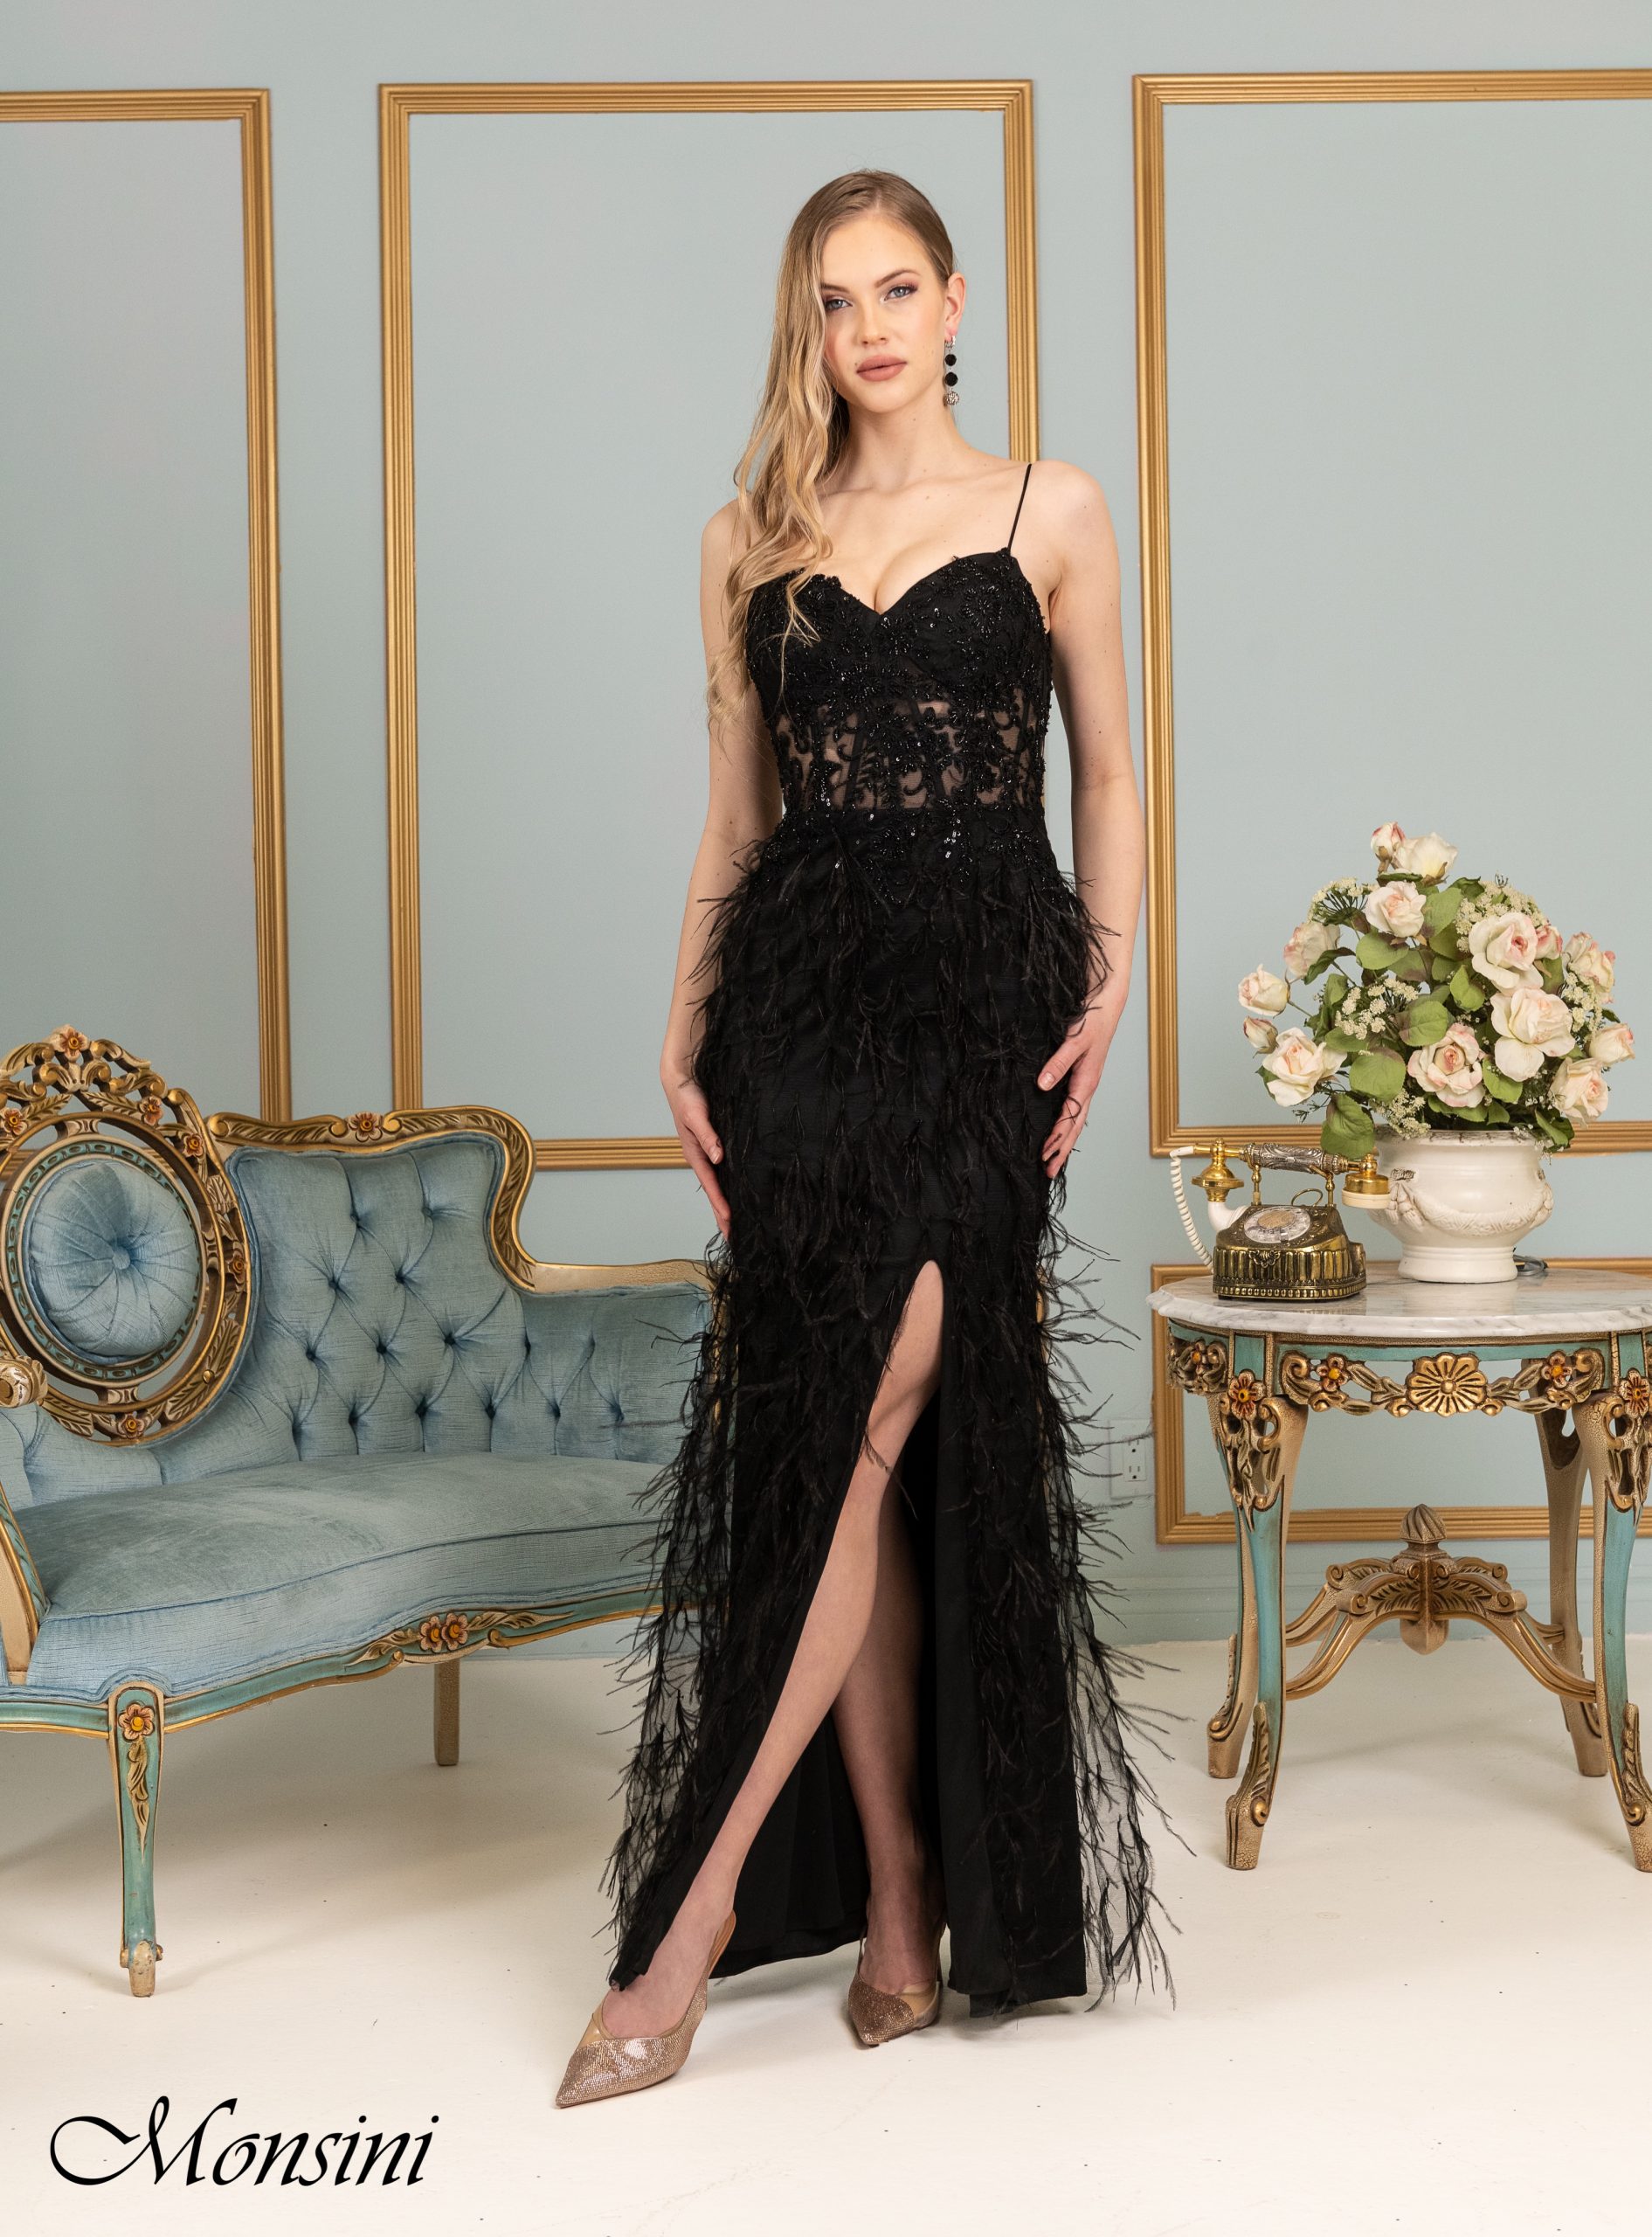 31930 - Monsini Prom Dresses available at Lisa's Bridal